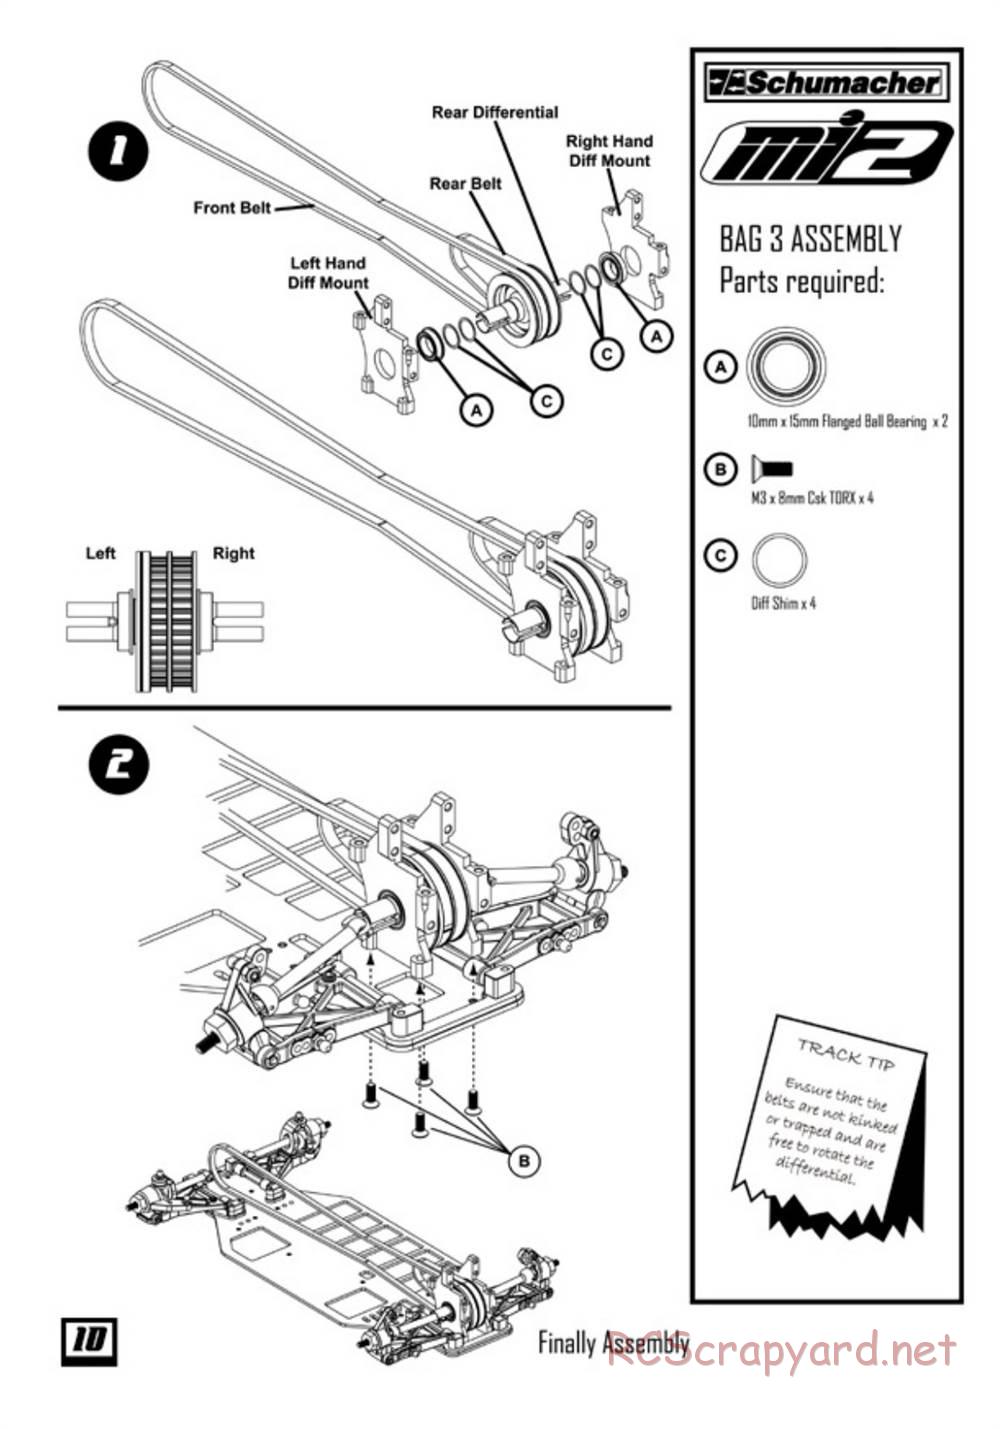 Schumacher - Mi2 - Manual - Page 12